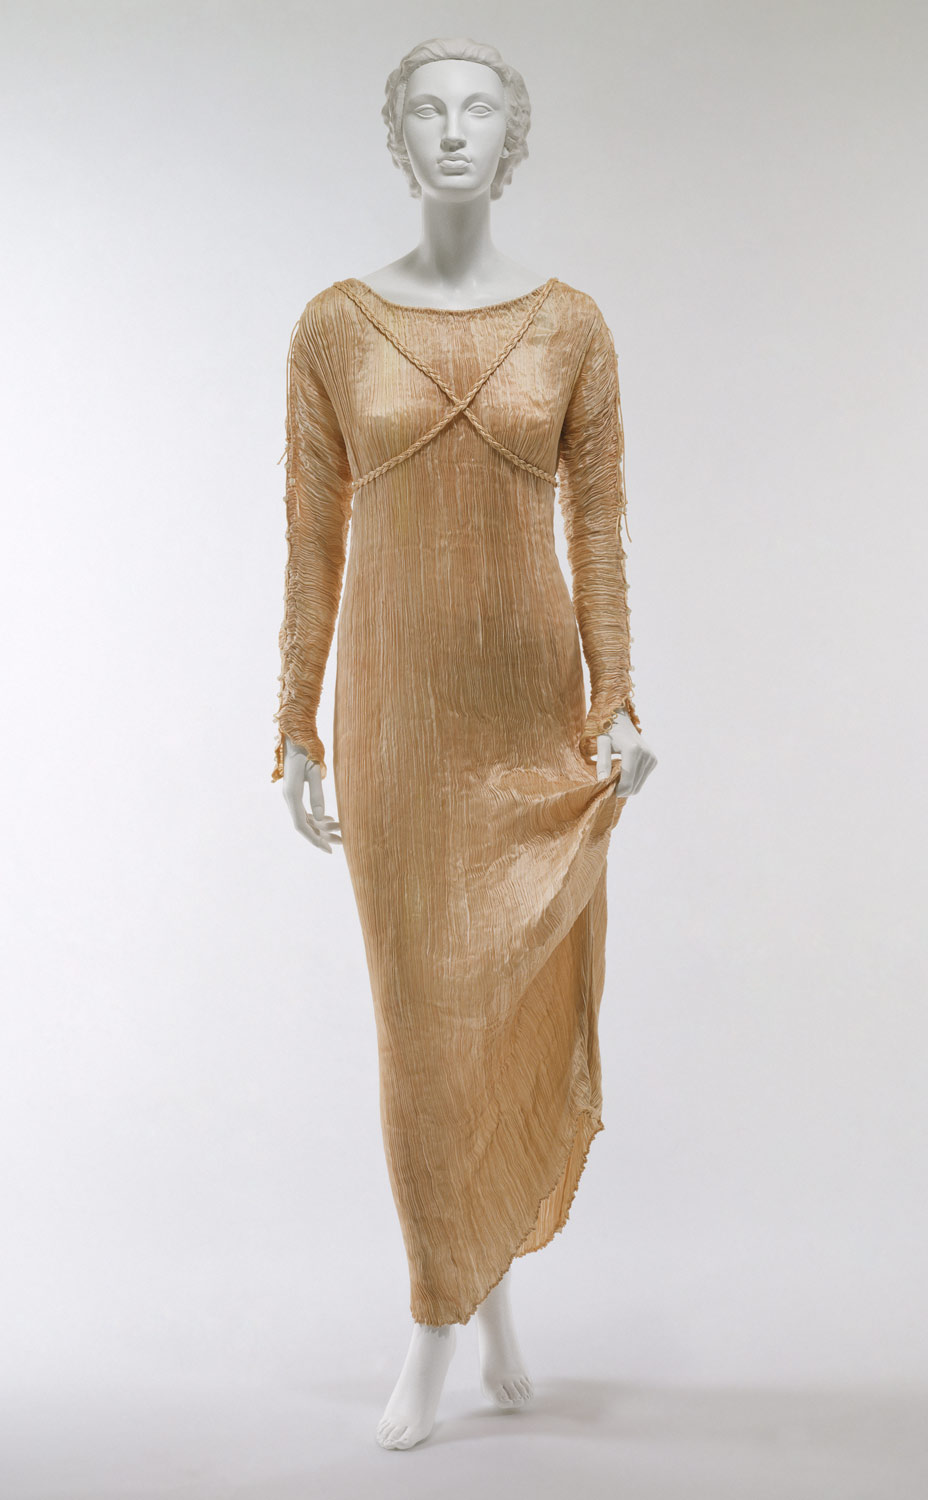 Dress | Fortuny, Mariano Fortuny | 1995.28.6a | Work of Art | Heilbrunn